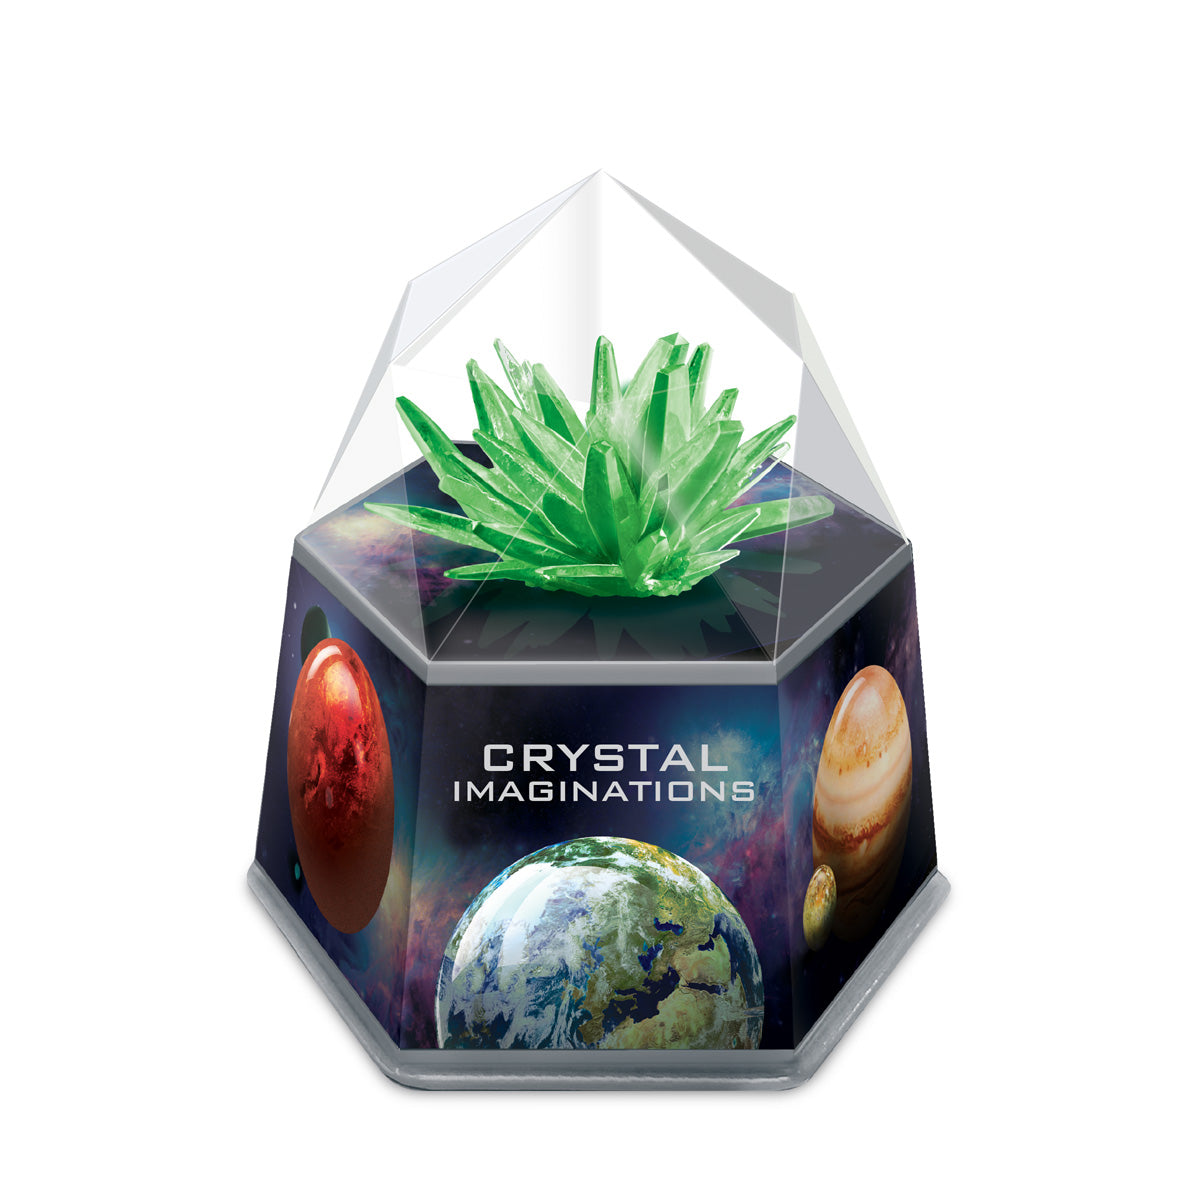 Crystal Imagination Crystal Growing Kit Green